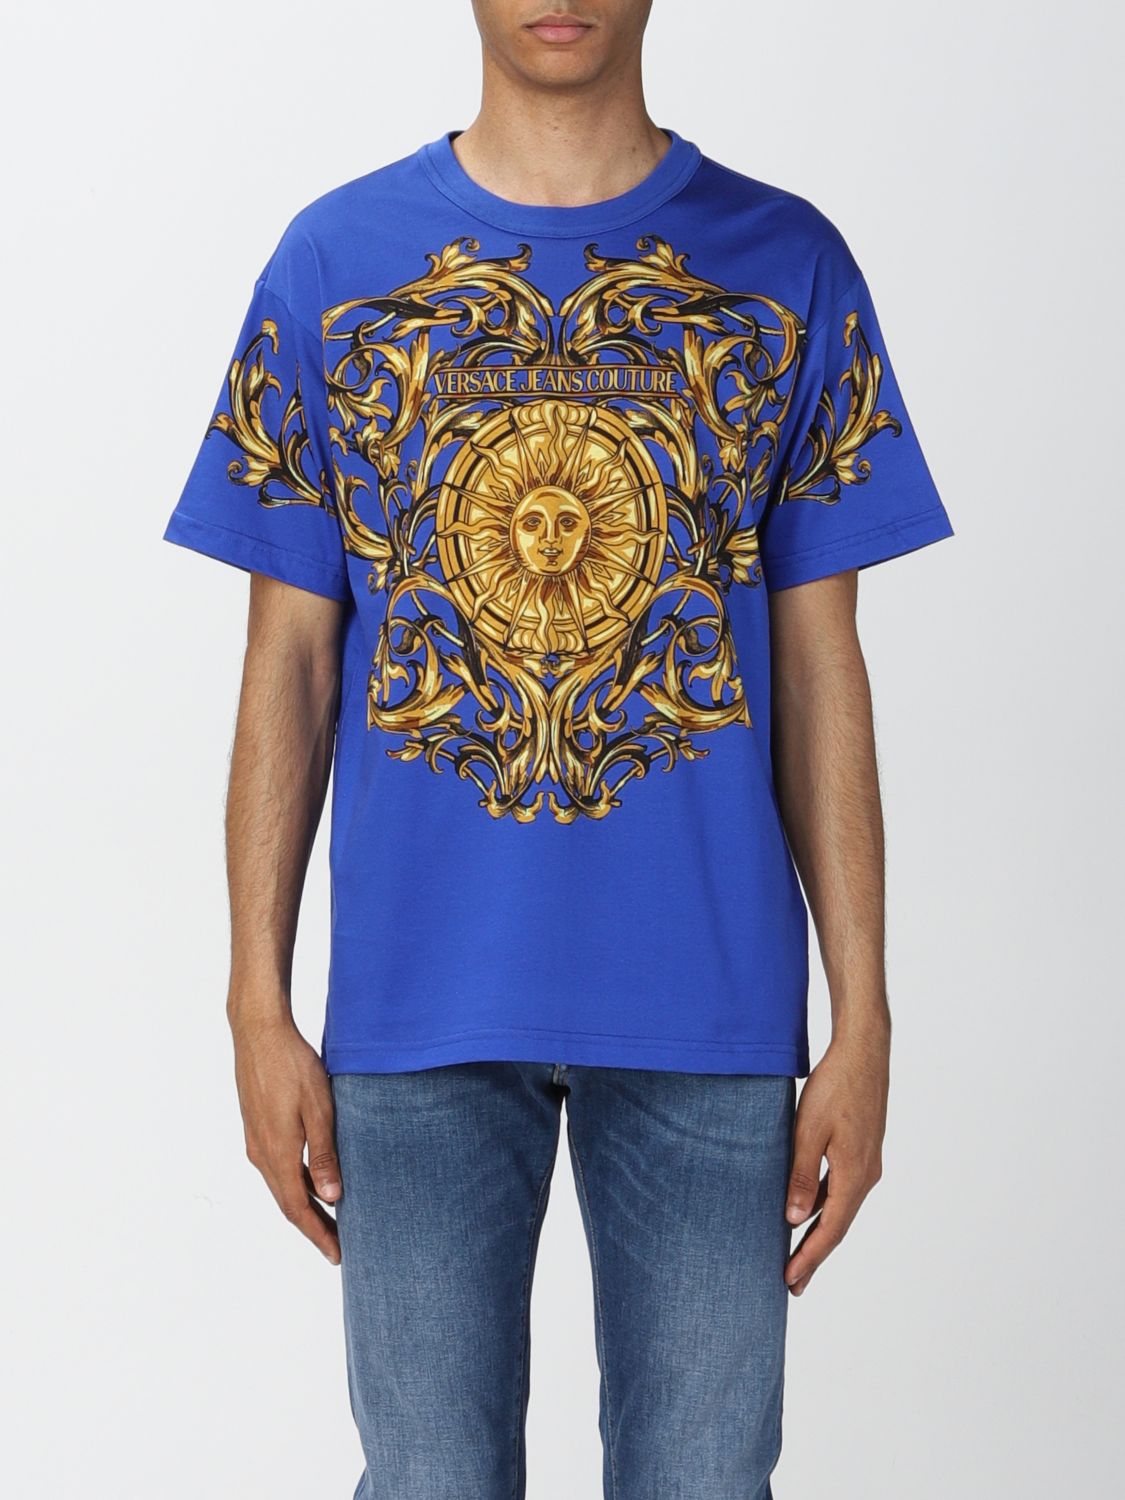 VERSACE JEANS COUTURE, Blue Men's Patterned Shirt